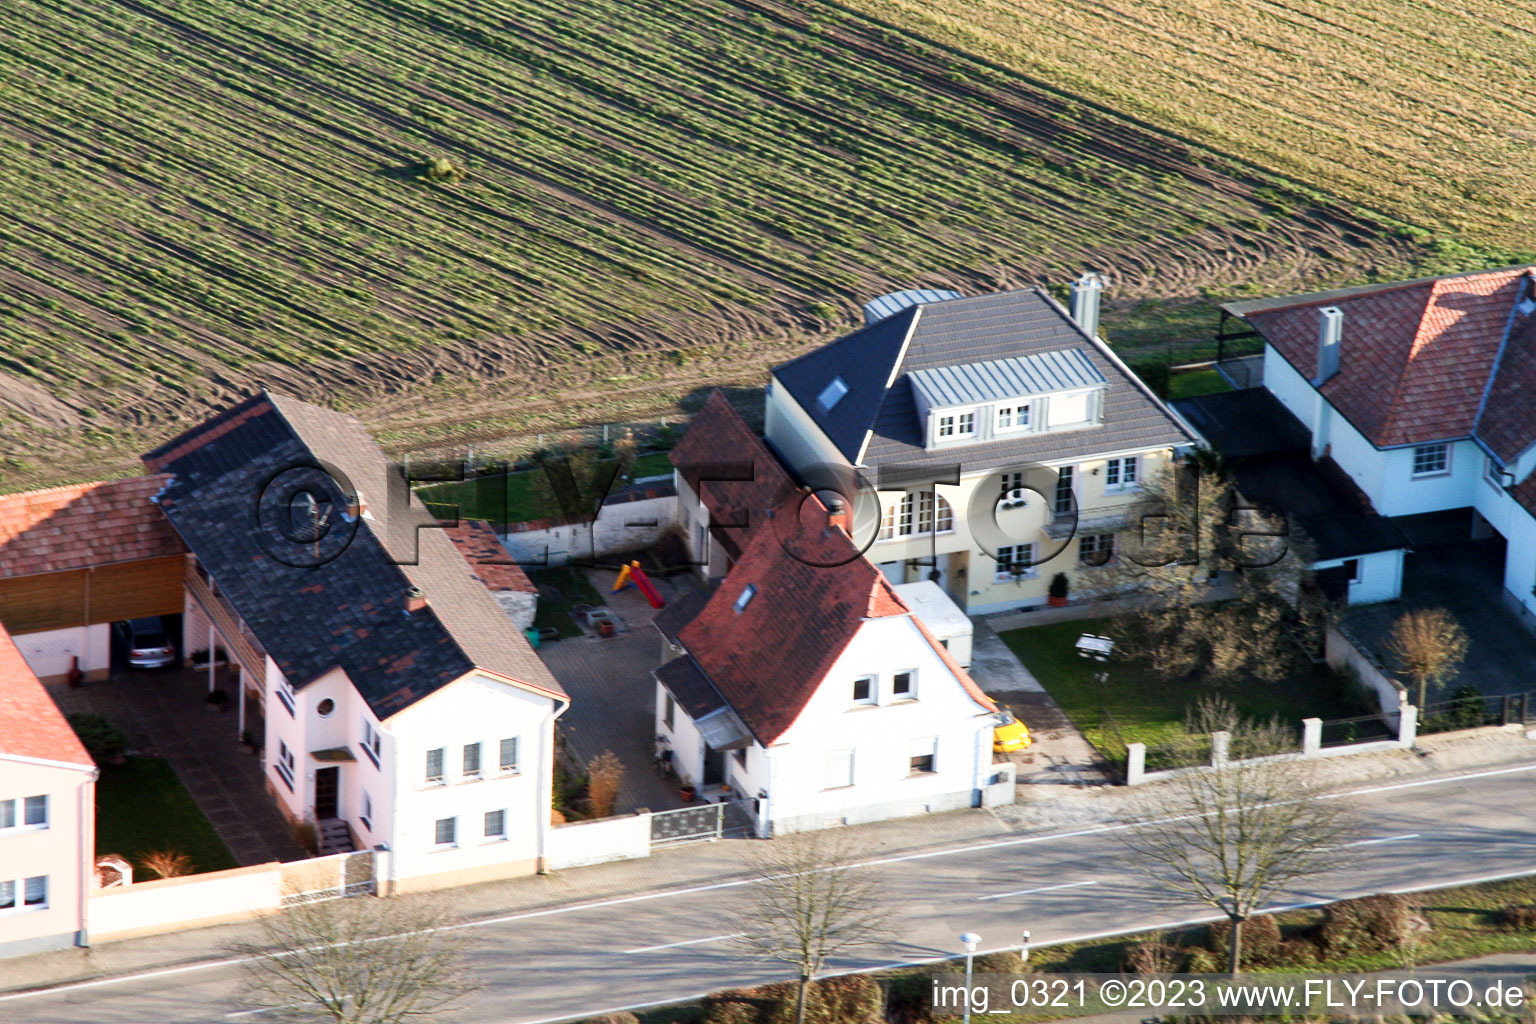 Aerial view of Jockgrimerstr in Rheinzabern in the state Rhineland-Palatinate, Germany